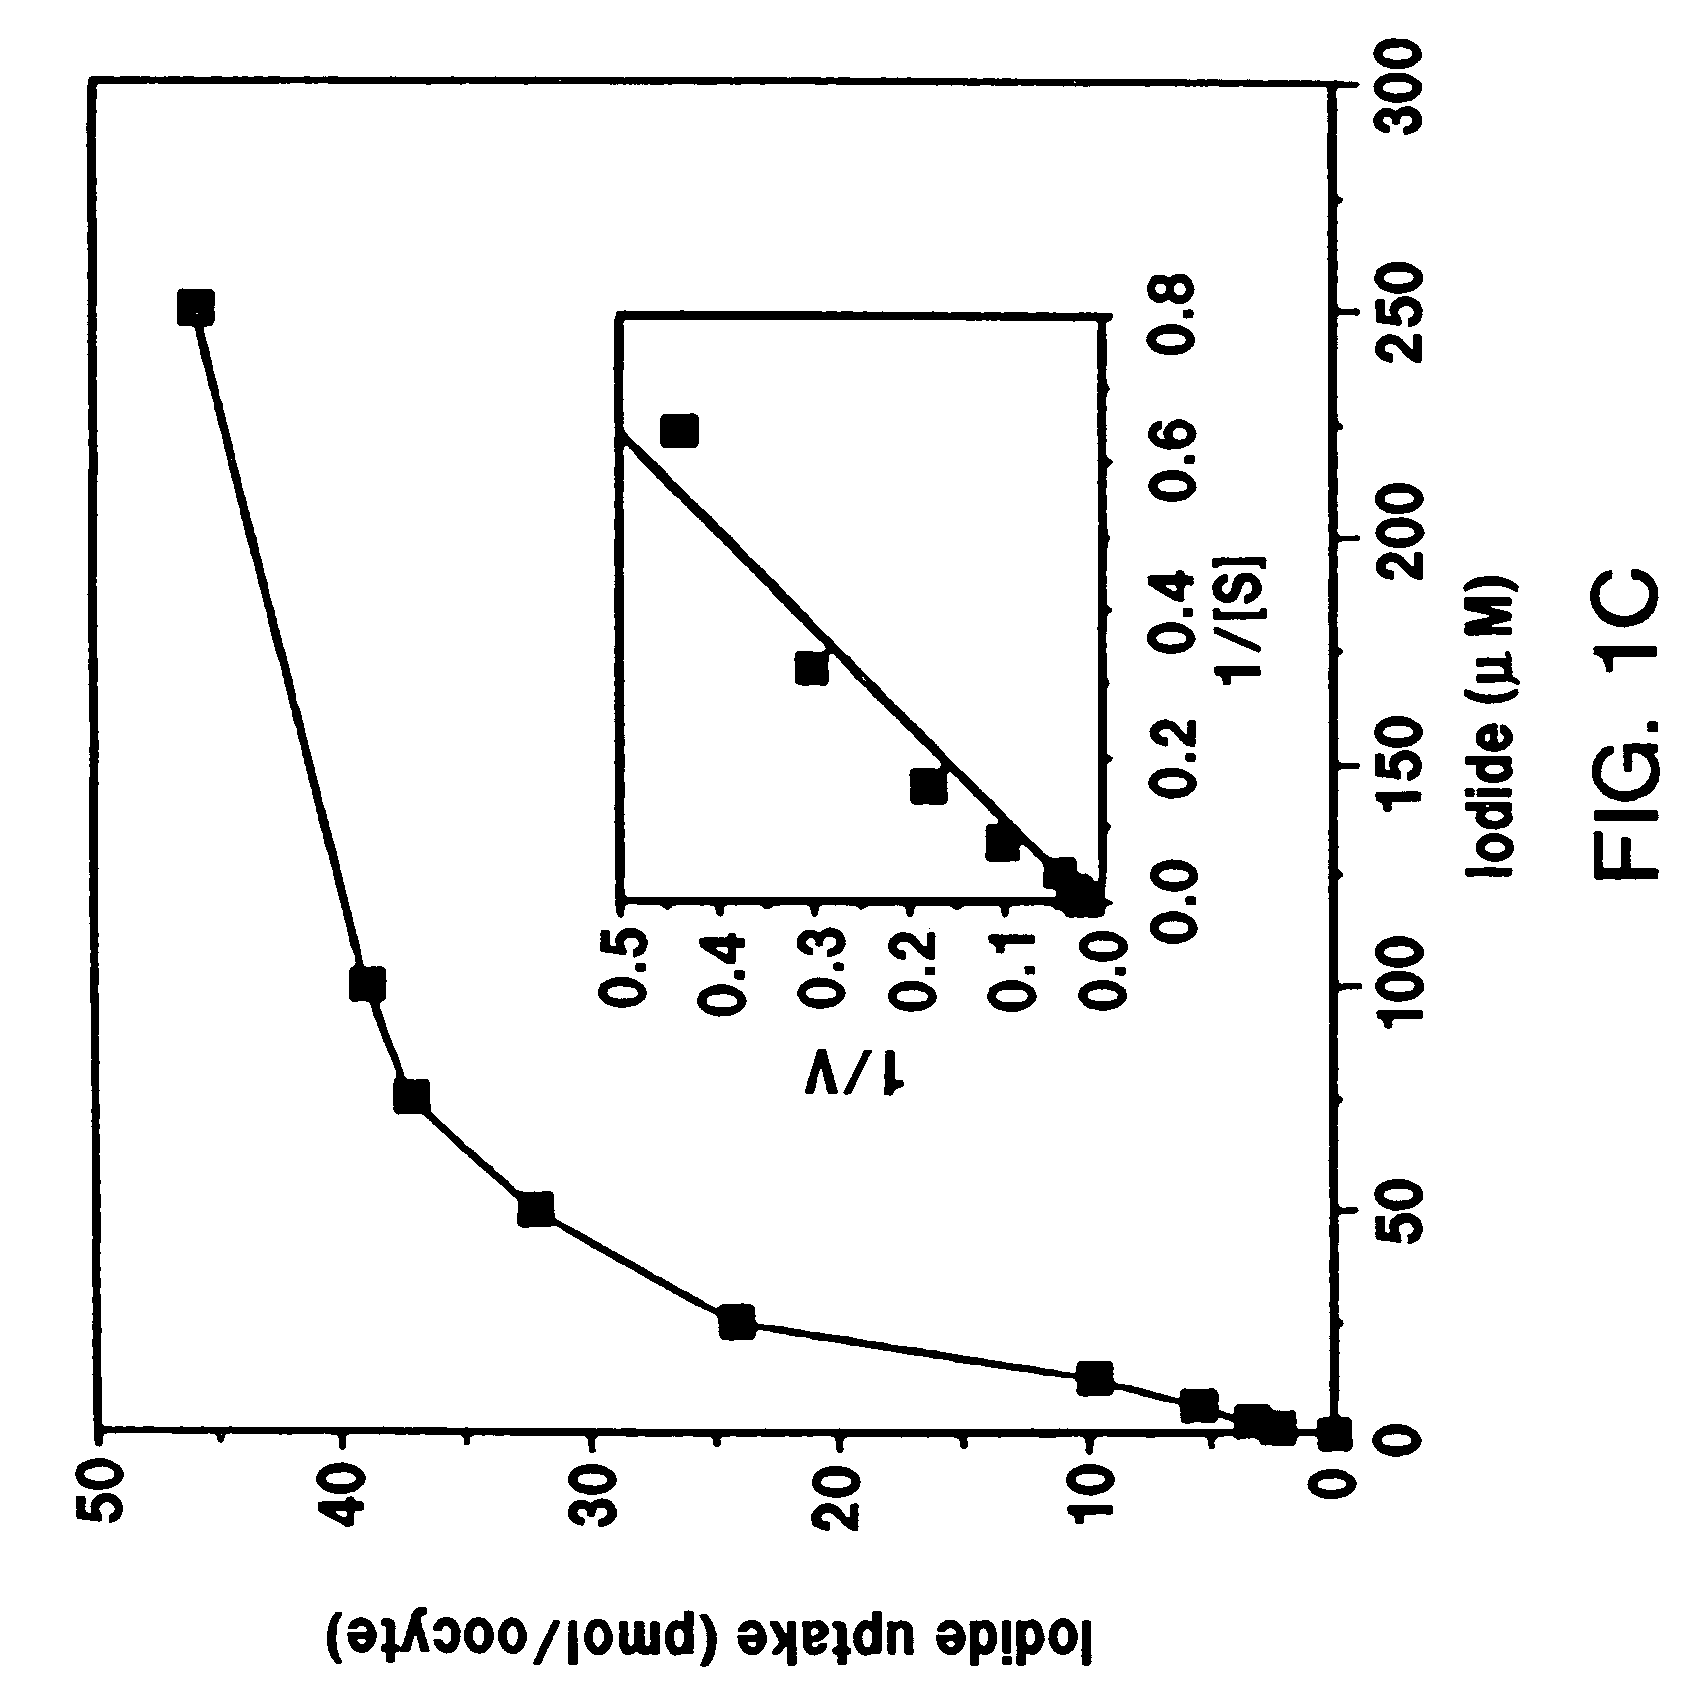 Thyroid sodium/iodide symporter and nucleic acid encoding same